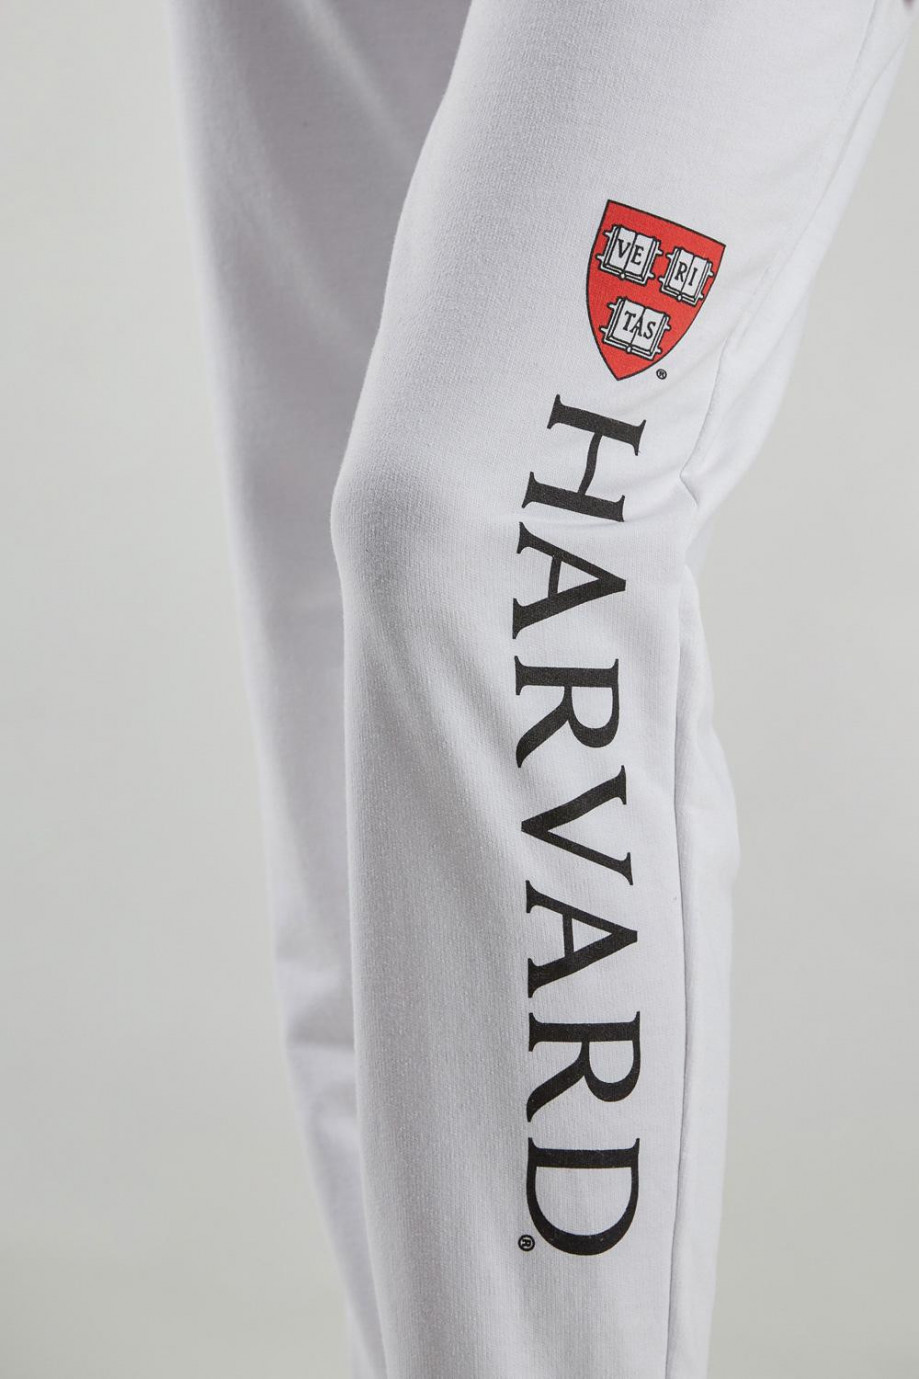 Pantalón jogger crema con estampado de Harvard en frente